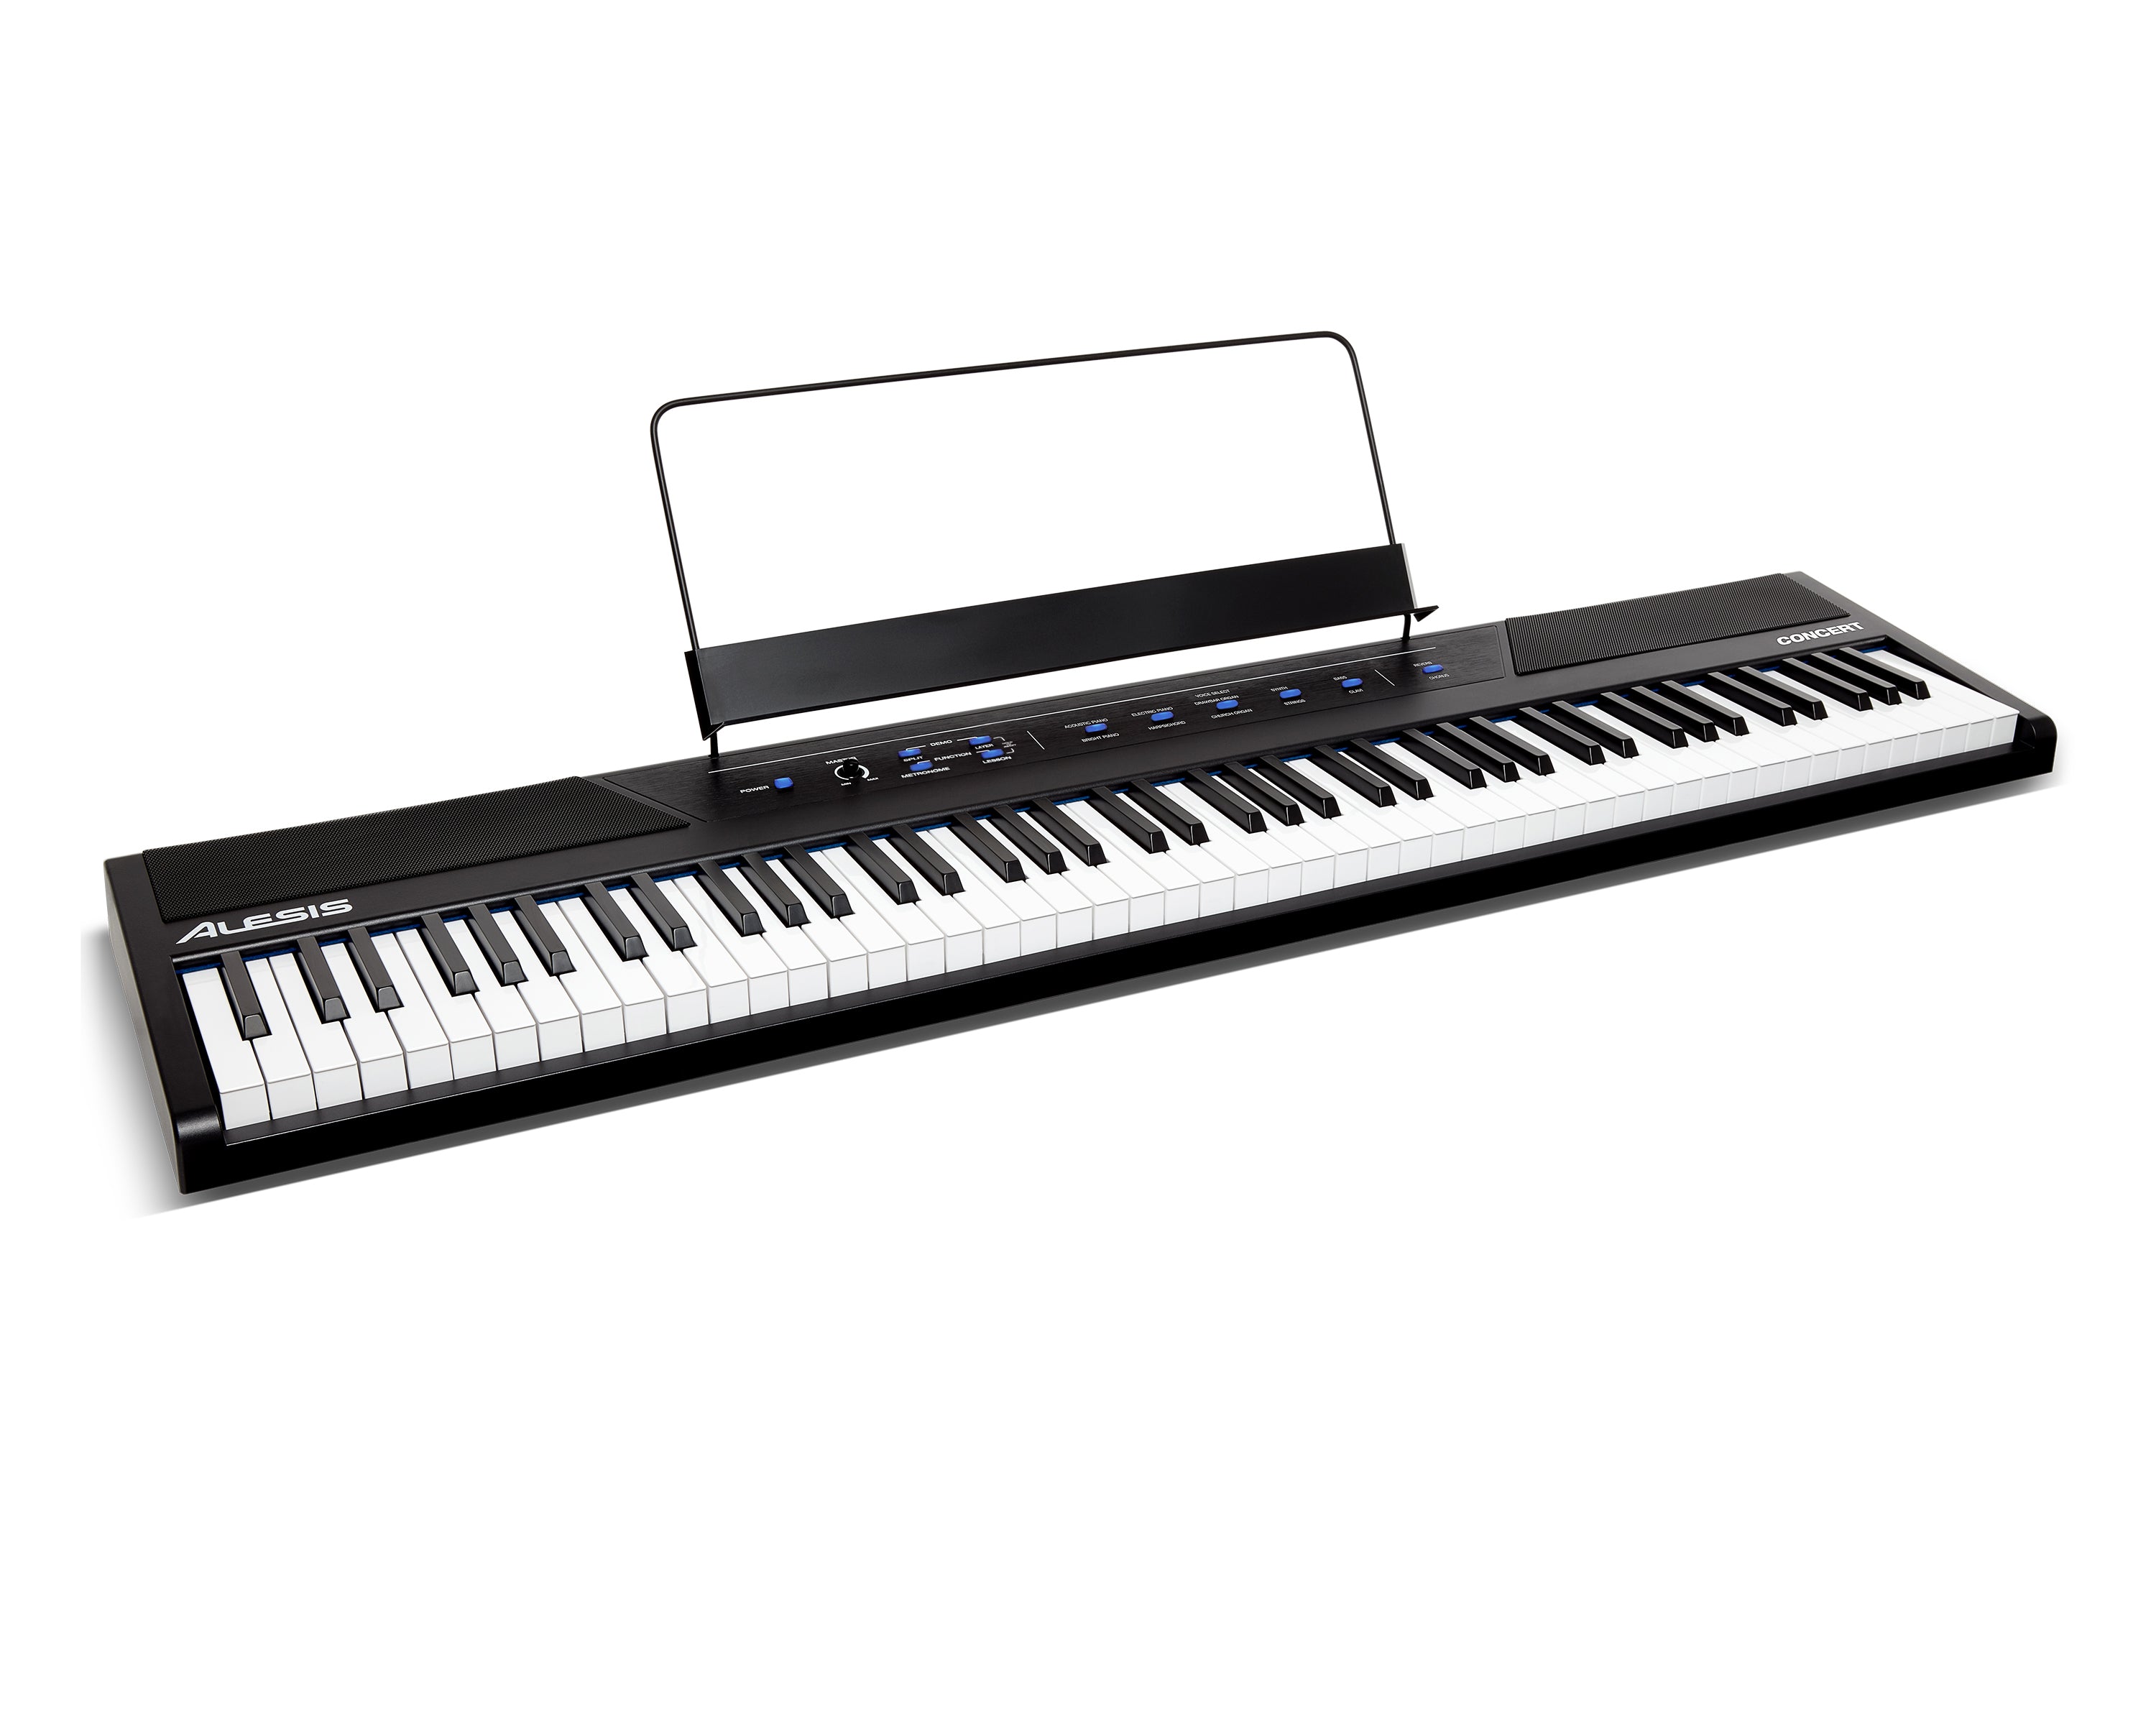 Alesis Concert Digital Piano w/ 88 Full-Sized Keys